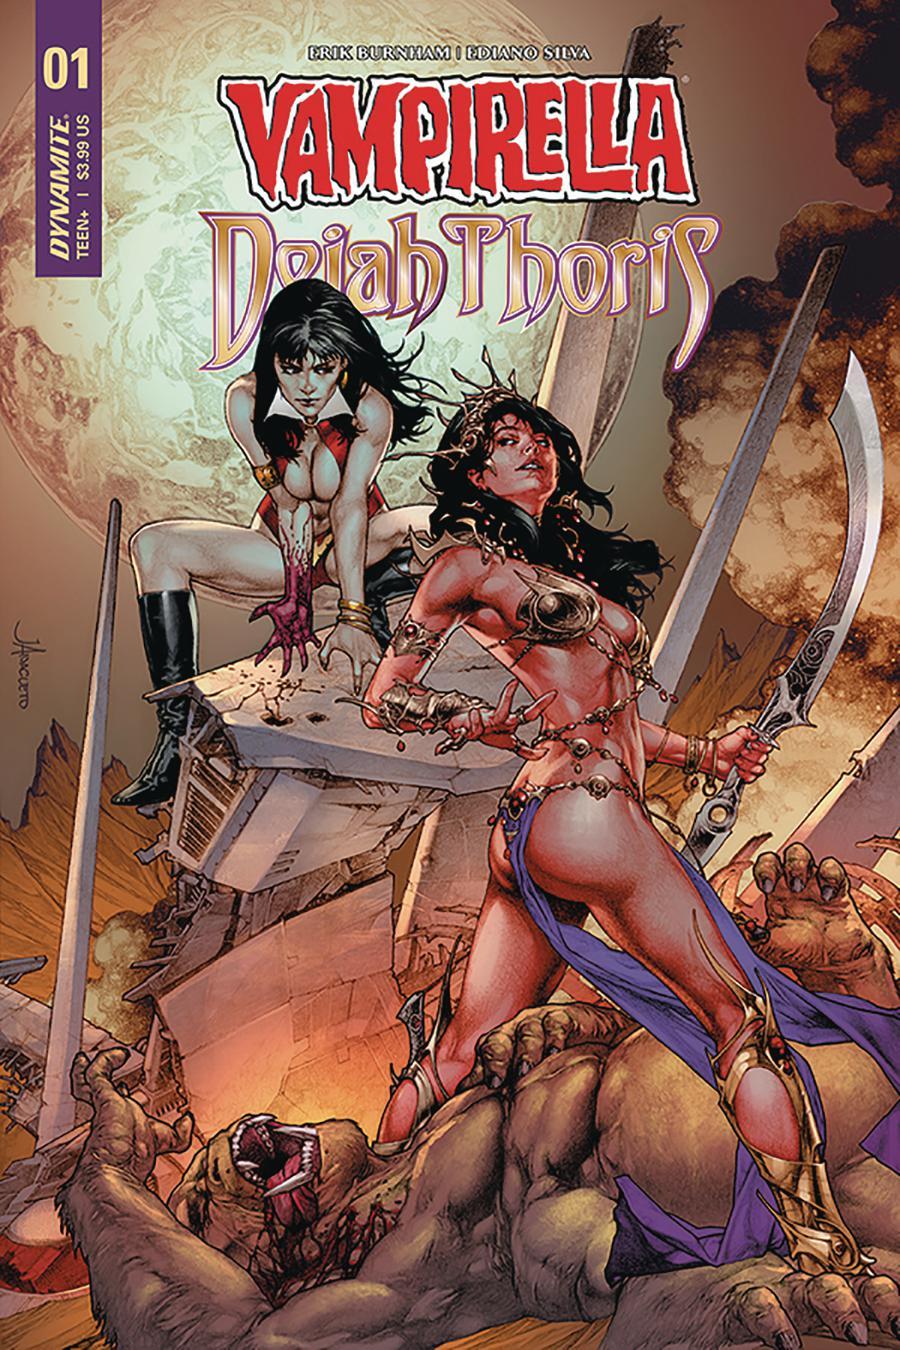 Vampirella Dejah Thoris Vol. 1 #1